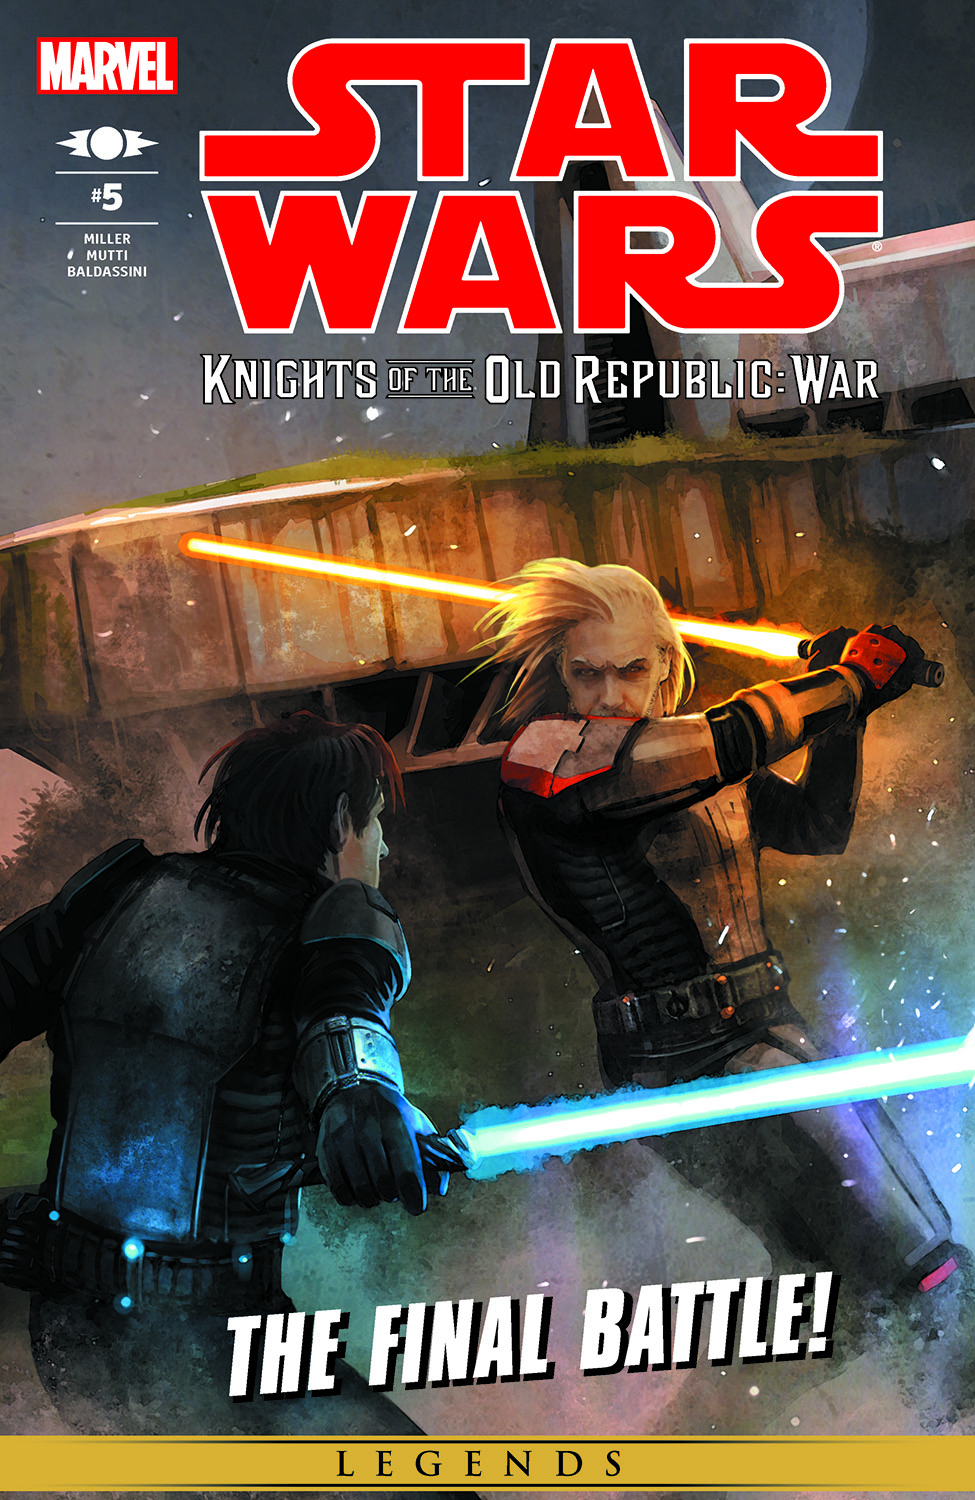 Star Wars: Knights of the Old Republic - War (2012) #5